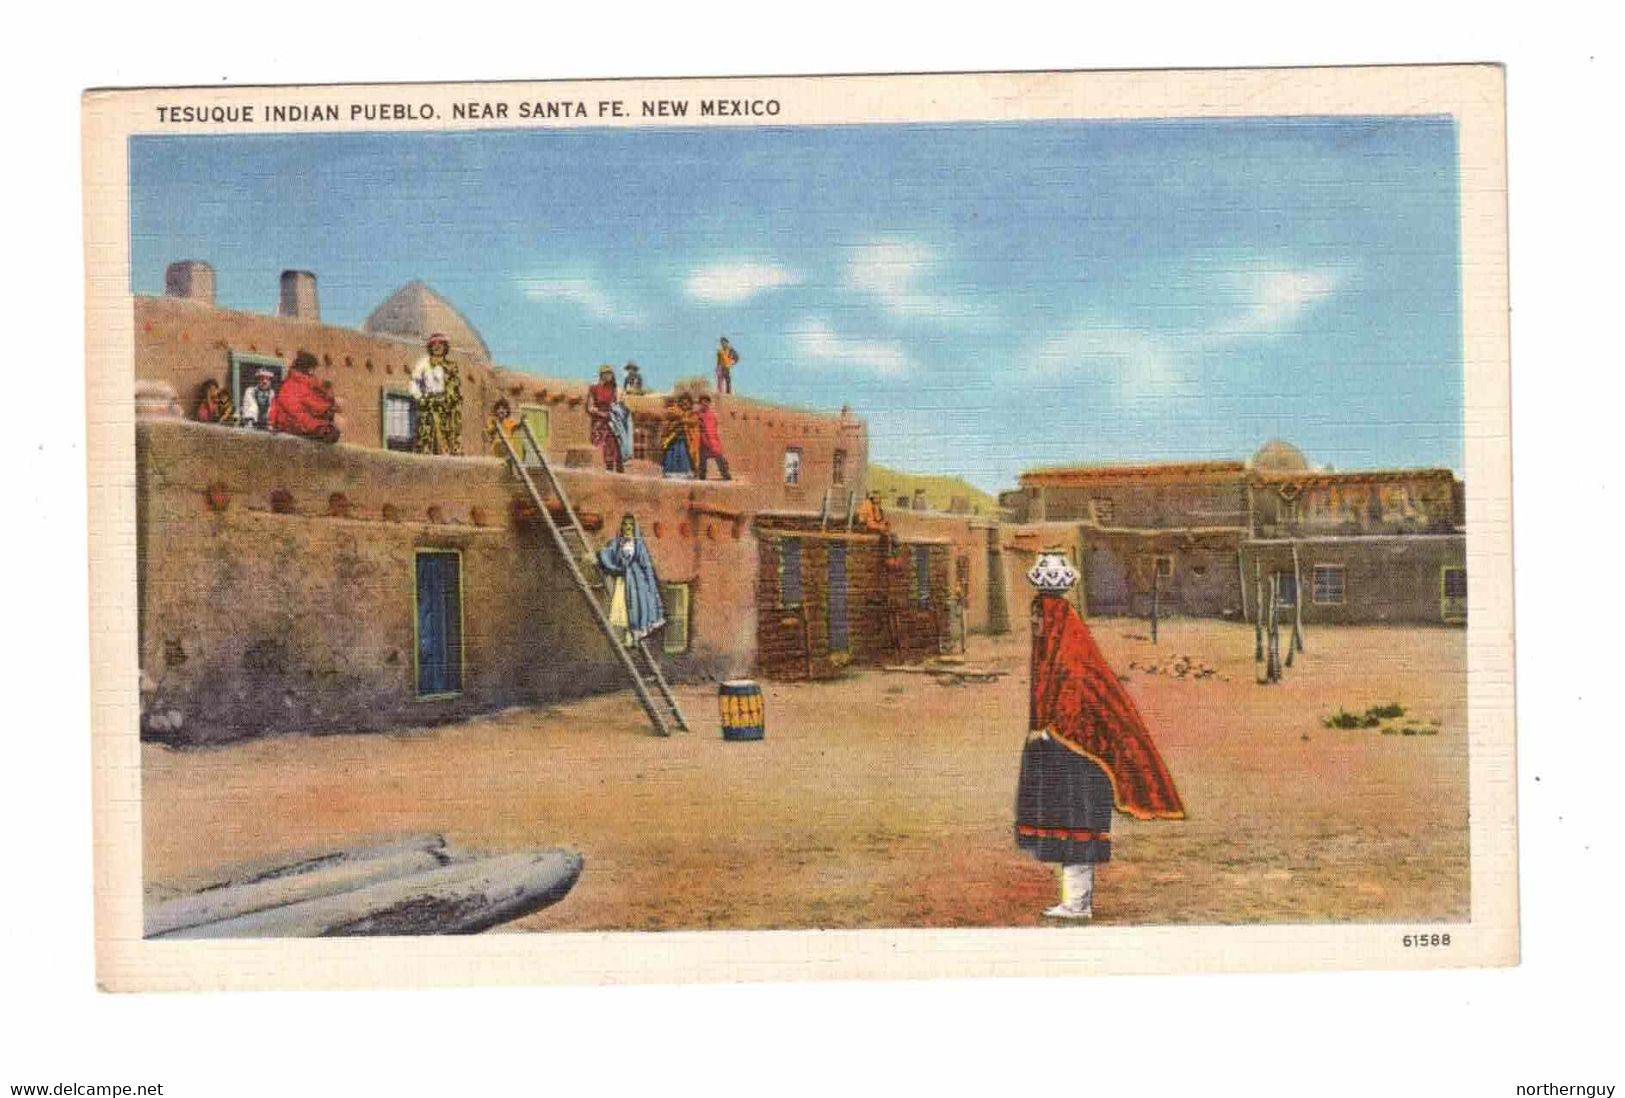 SANTA FE, New Mexico, USA, TESUQUE Indian Pueblo, 193? Linen Postcard - Santa Fe